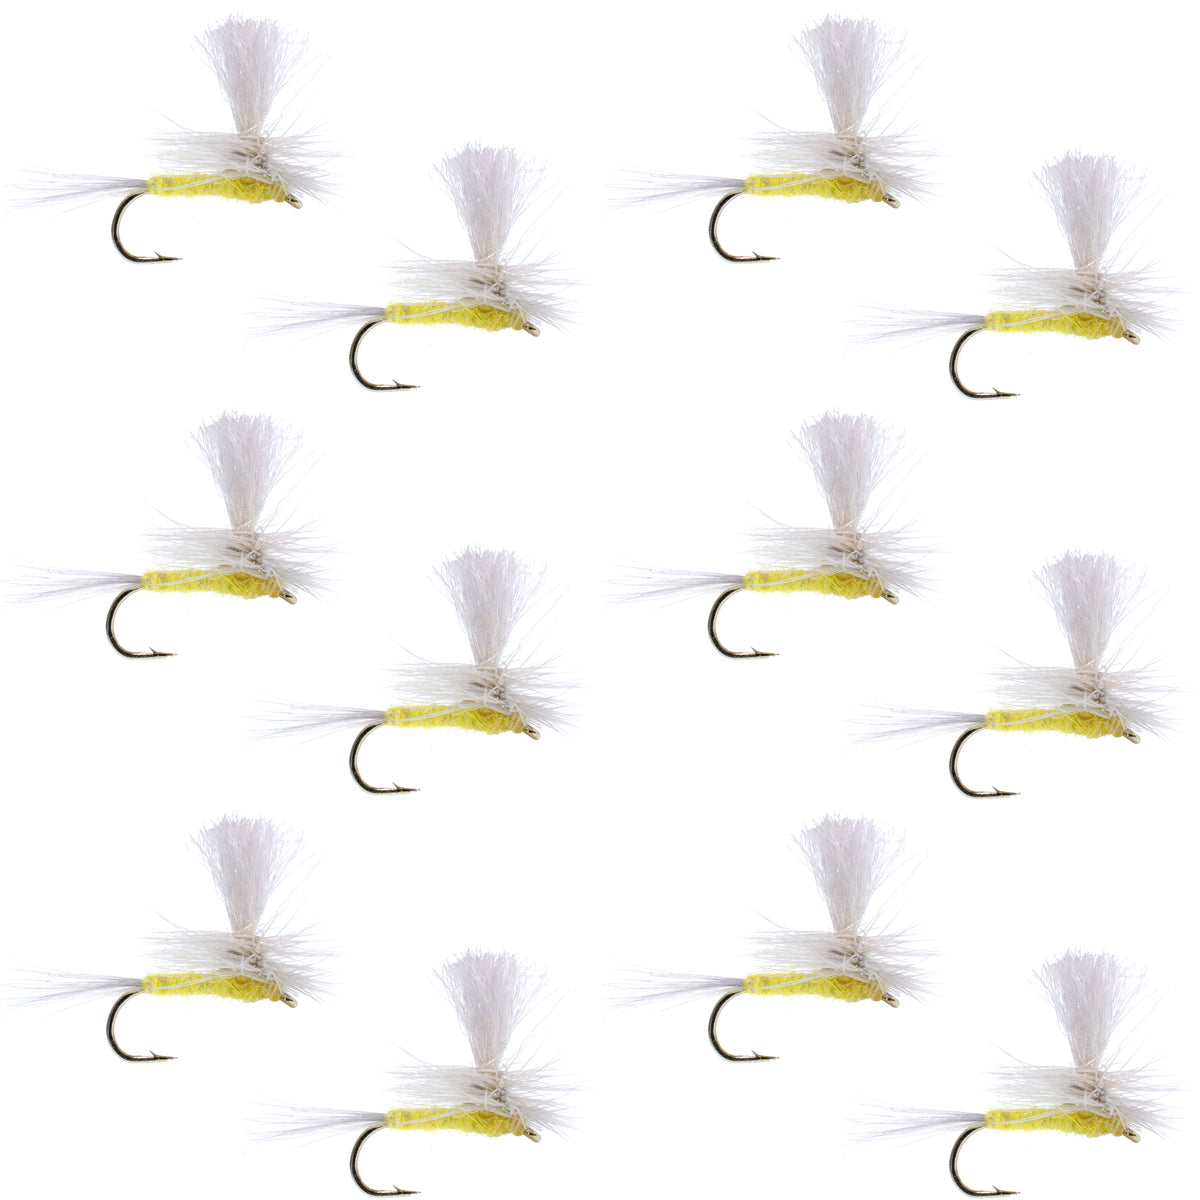 Pale Morning Dun Parachute PMD Classic Dry Fly - 1 Dozen Flies Hook Size 18